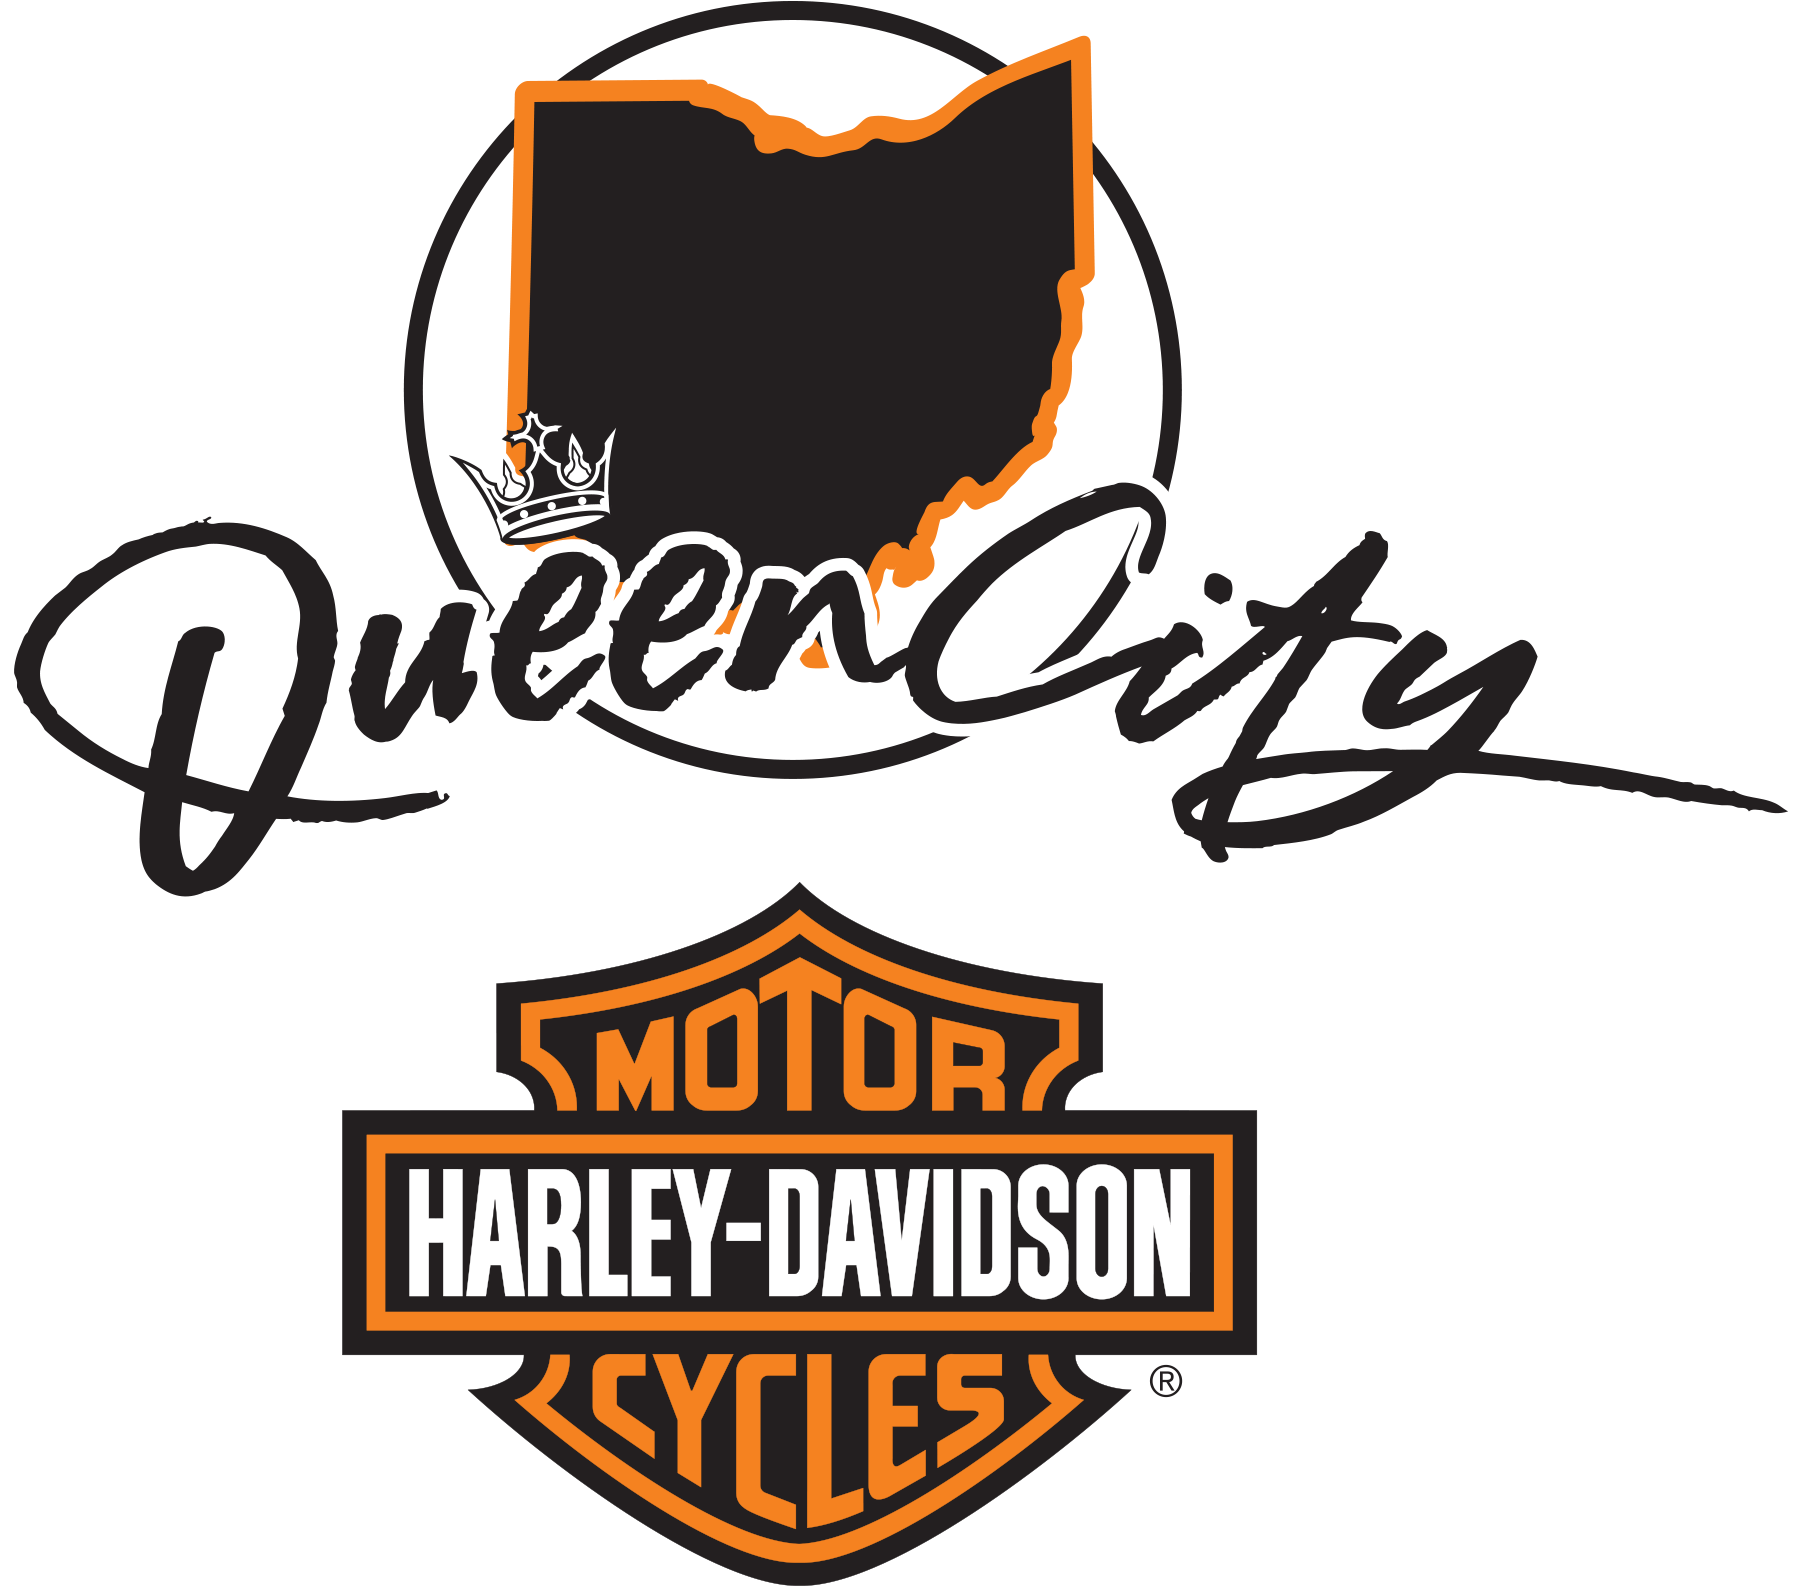 Queen City Harley-davidson - Queen City Harley-davidson (1800x1593)